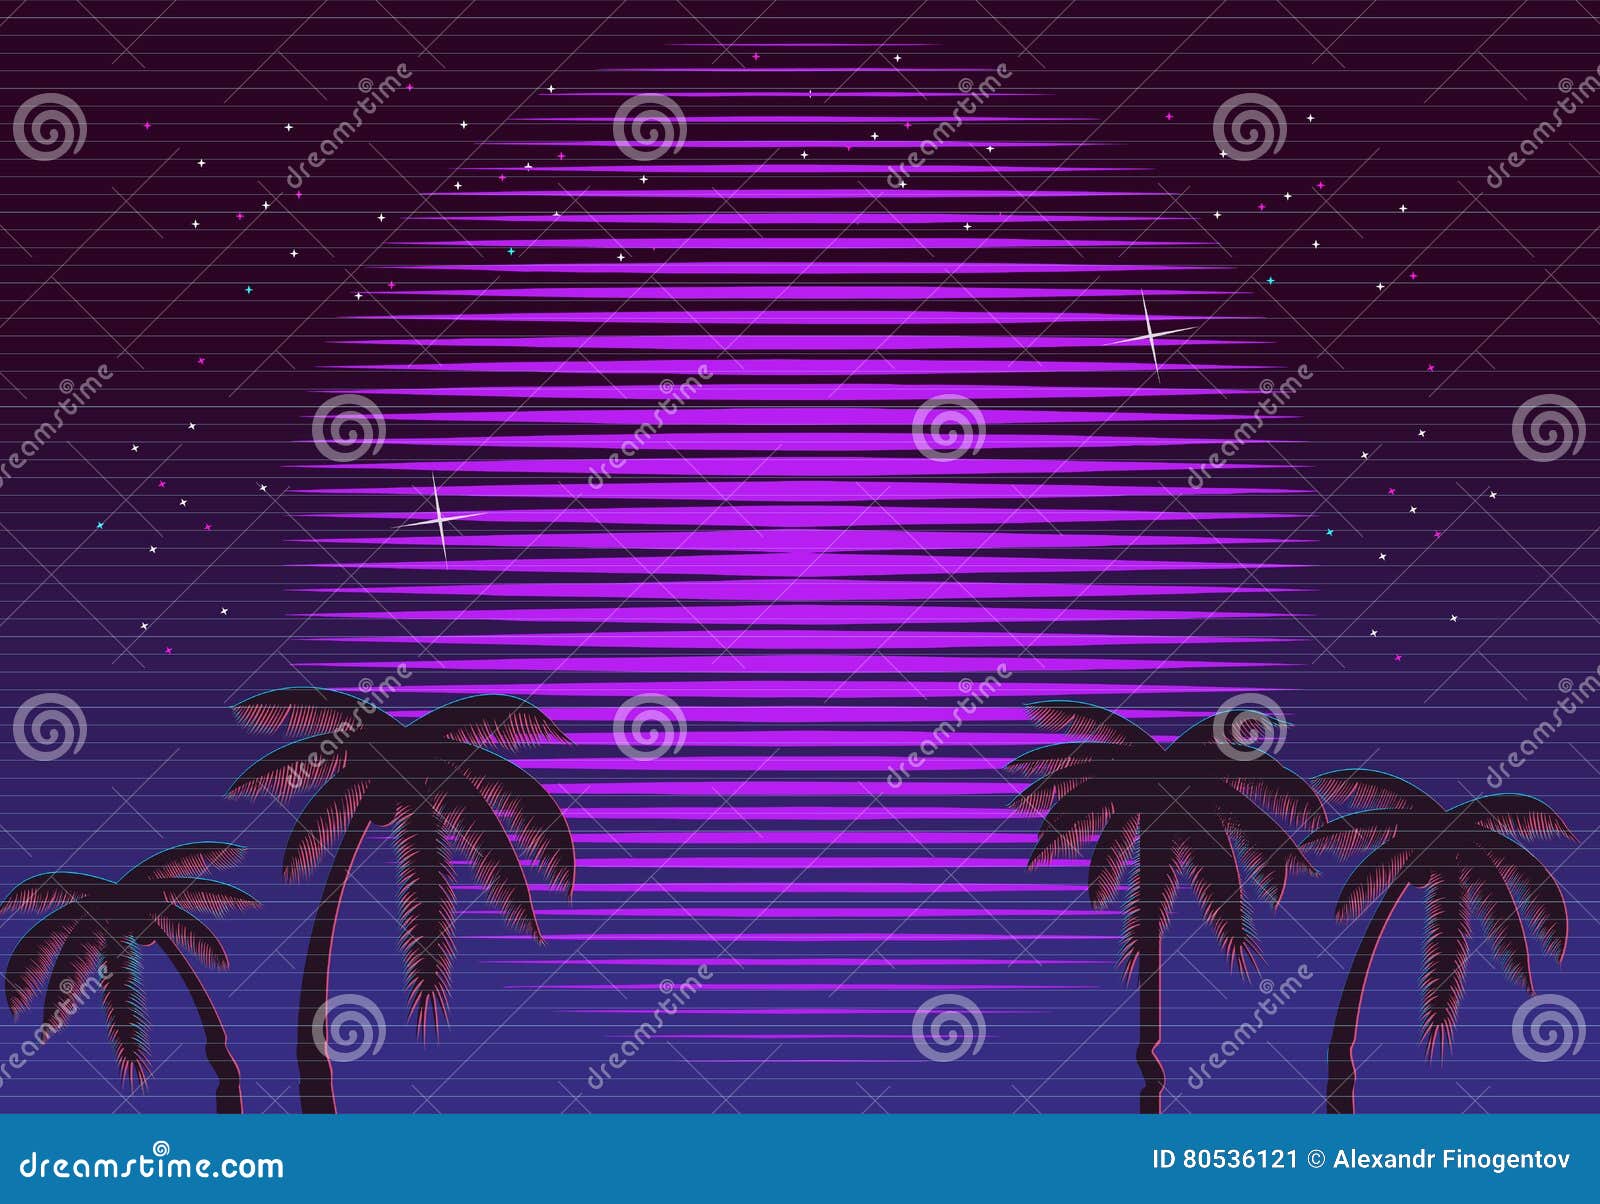 80s retro neon gradient background. palms and sun. tv glitch effect. sci-fi beach.